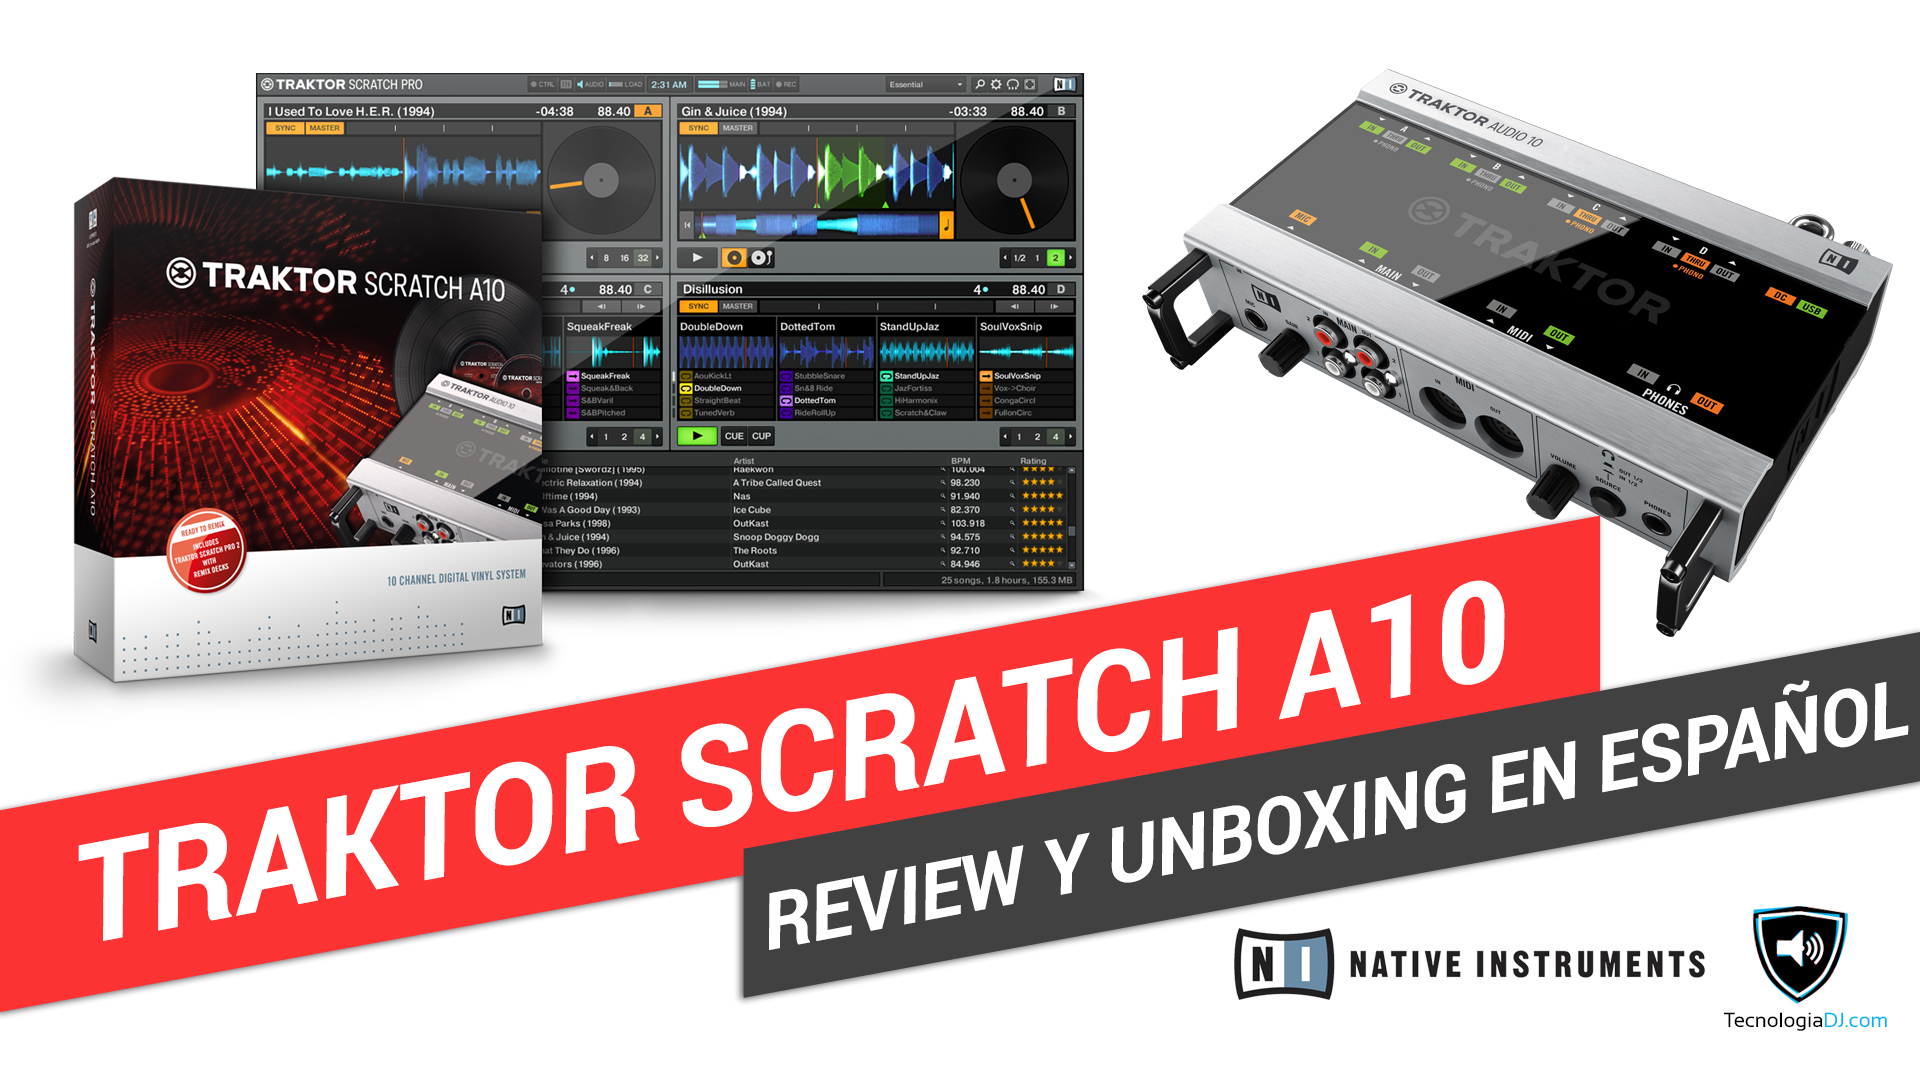 Review y unboxing en español interface de audio Native Instruments Traktor Scratch A10